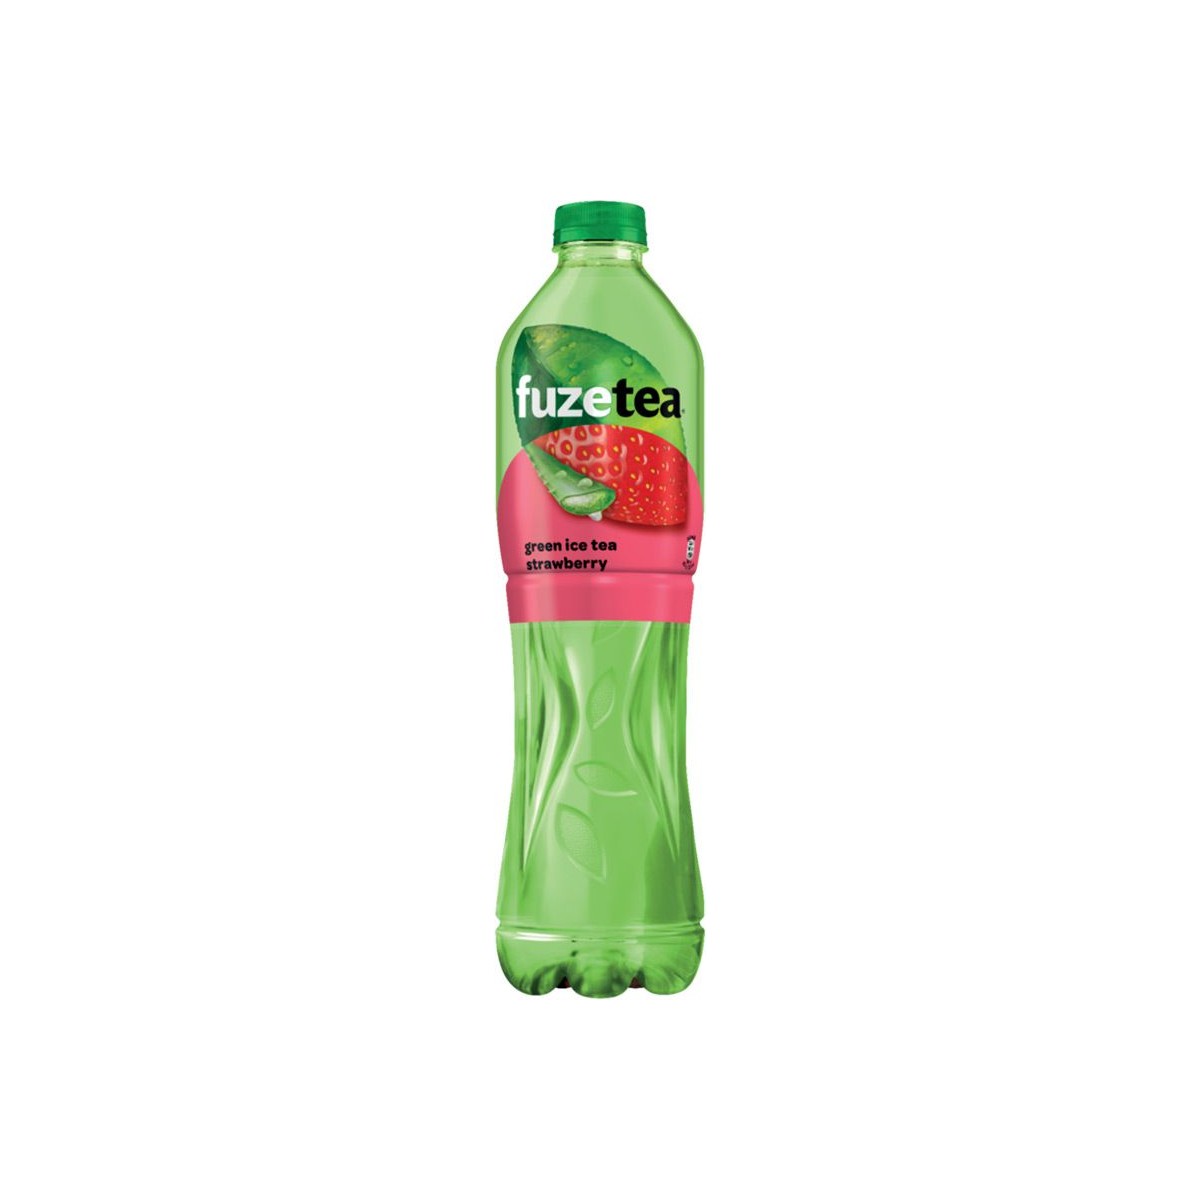 Fuze Tea Green Ice Tea strawberry & aloe 1,5l - PET